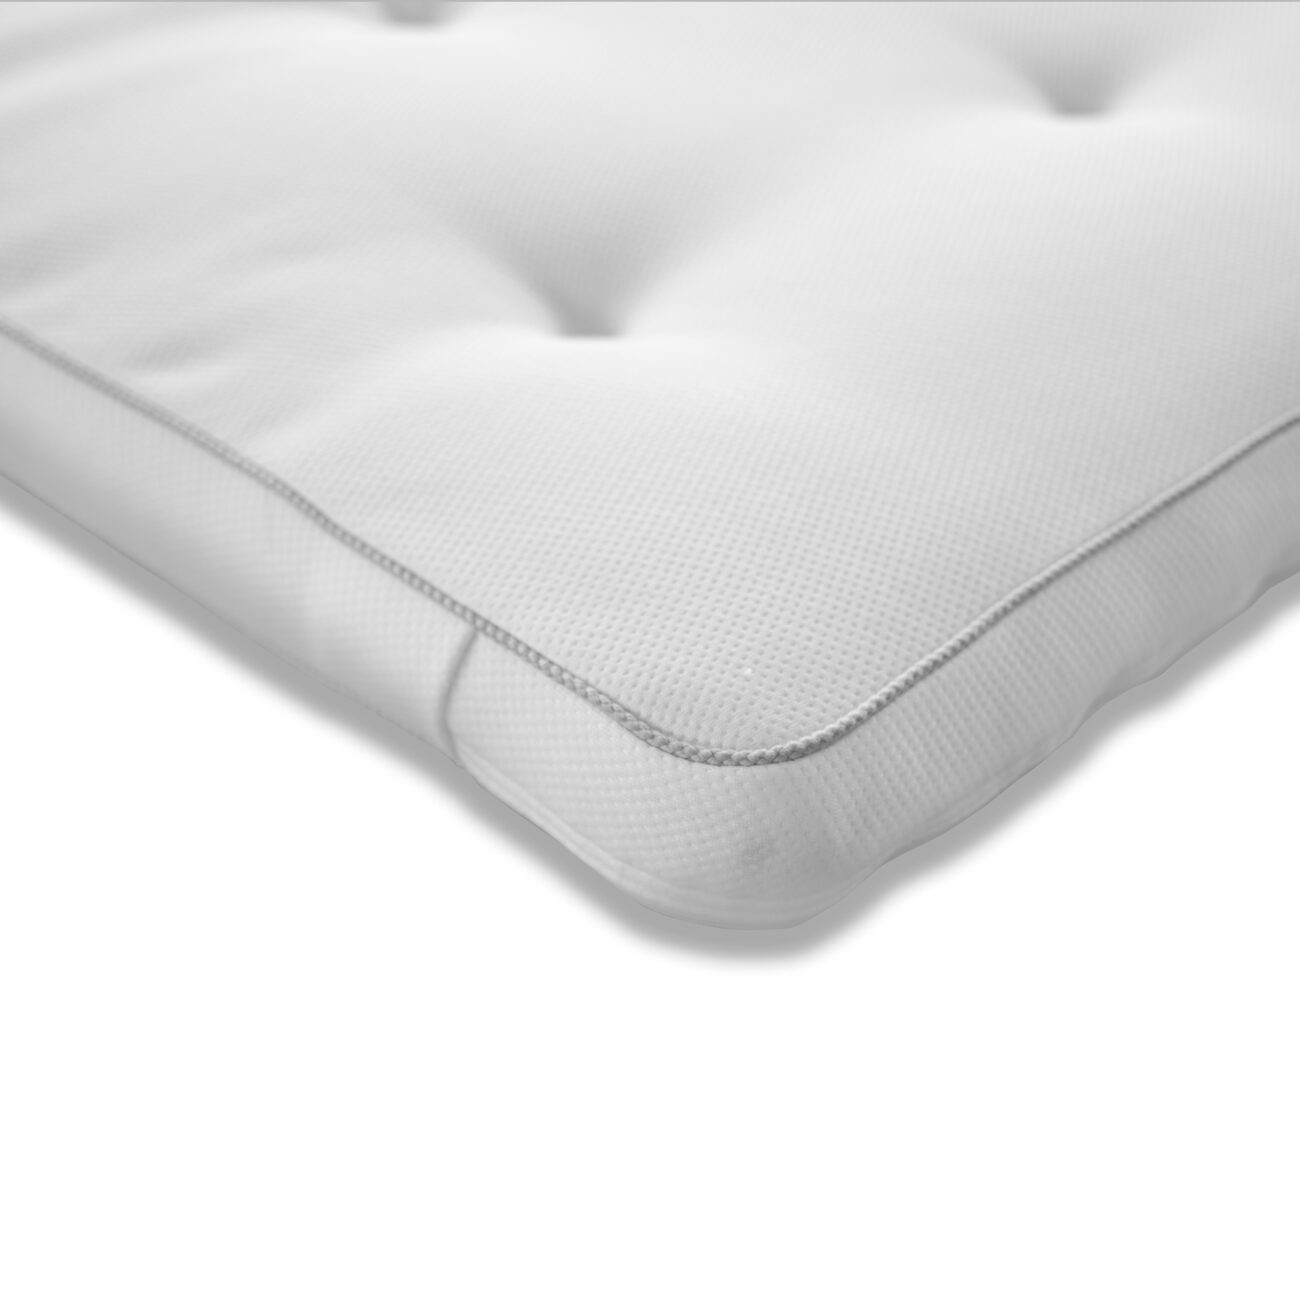 Bed mattress Trens foam 7cm